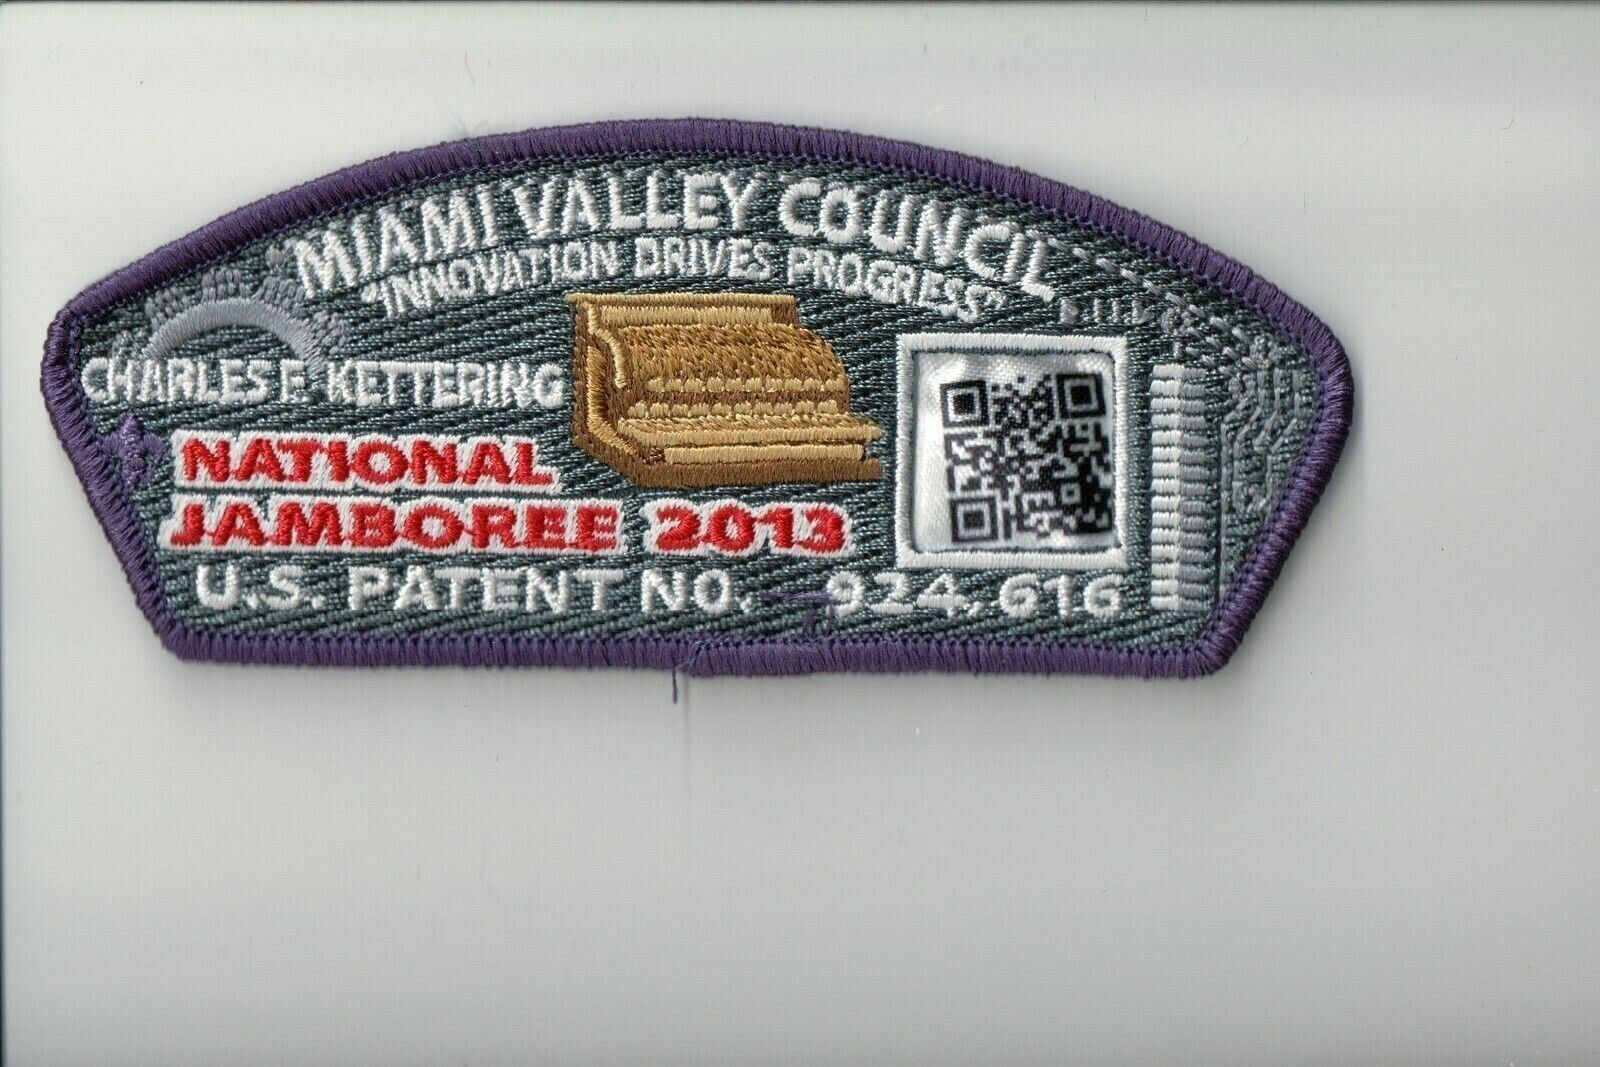 Miami Valley Council 2013 JSP Bar Code patch (Purple)